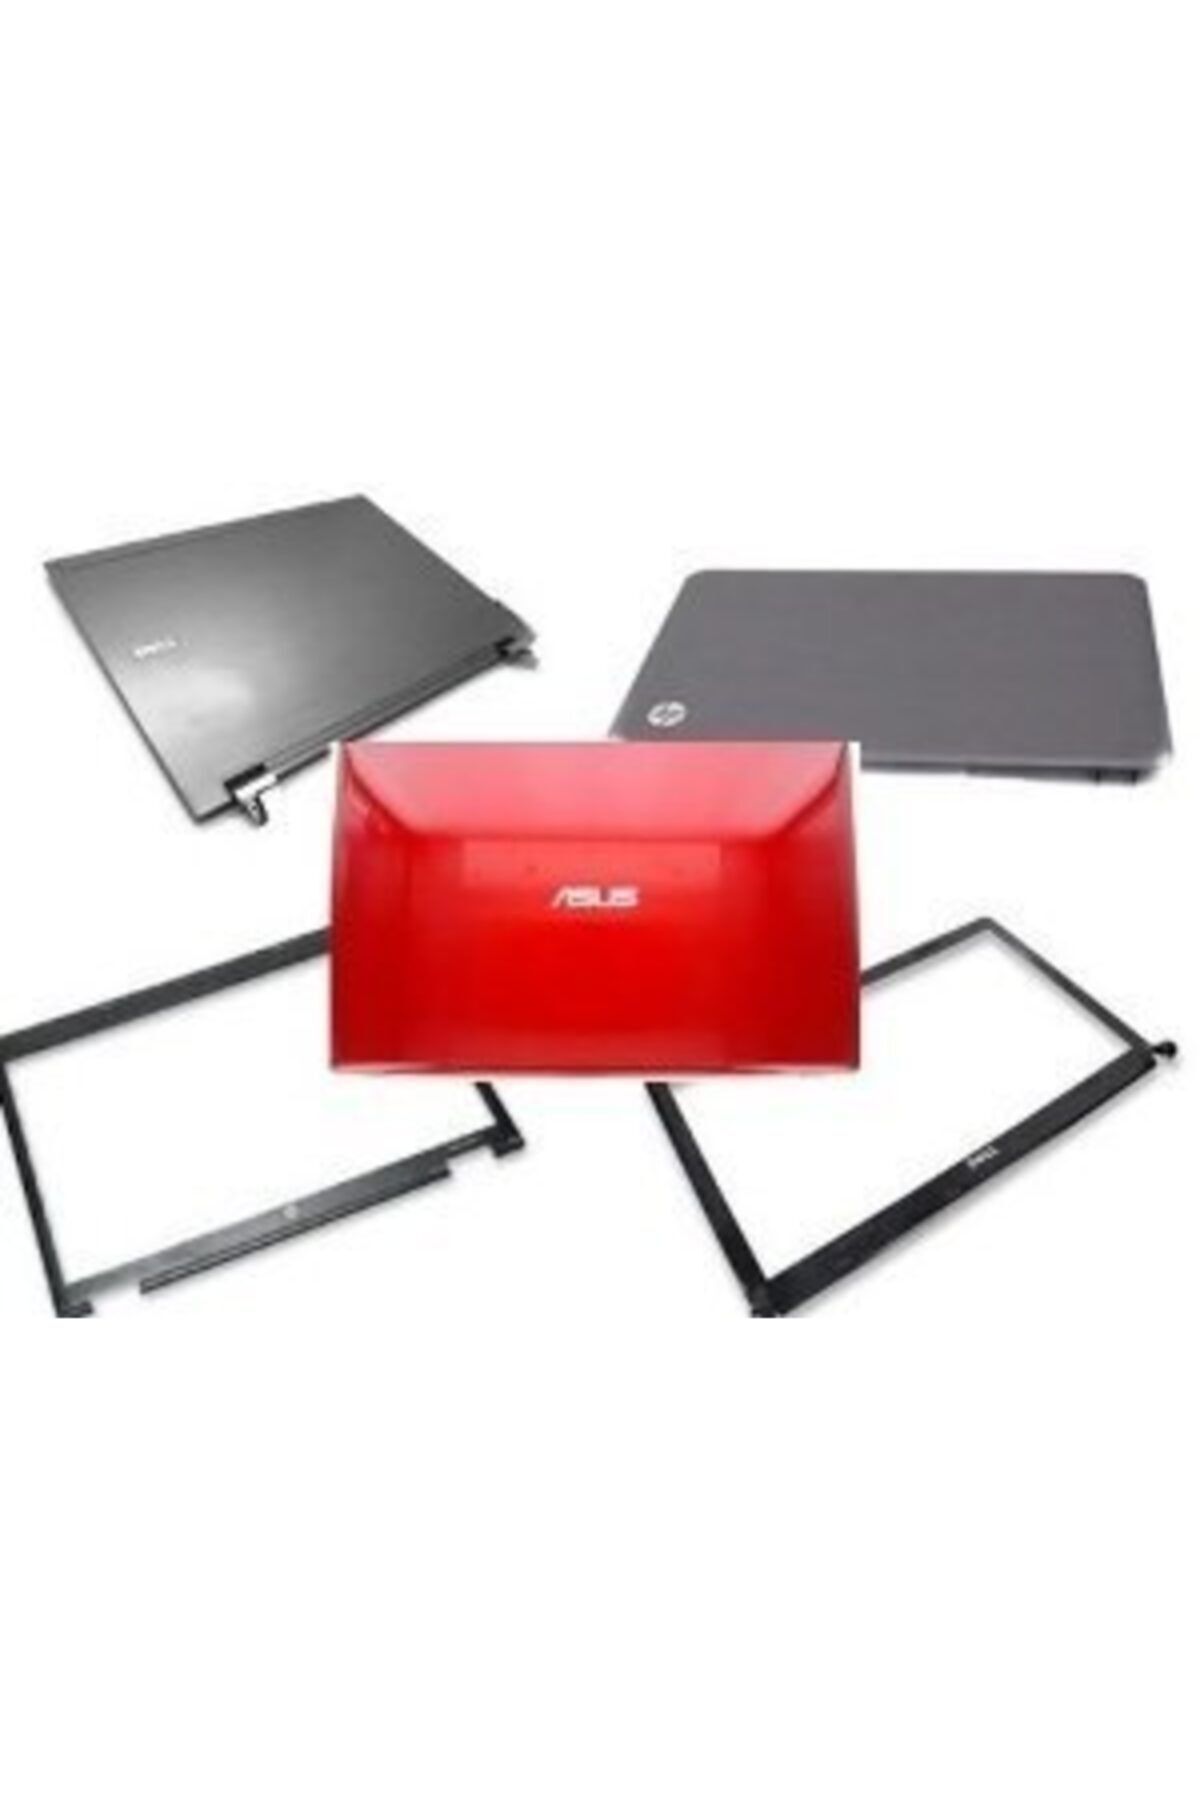 OEM Acer Aspire E5-531 Lcd Cover Kapak Siyah